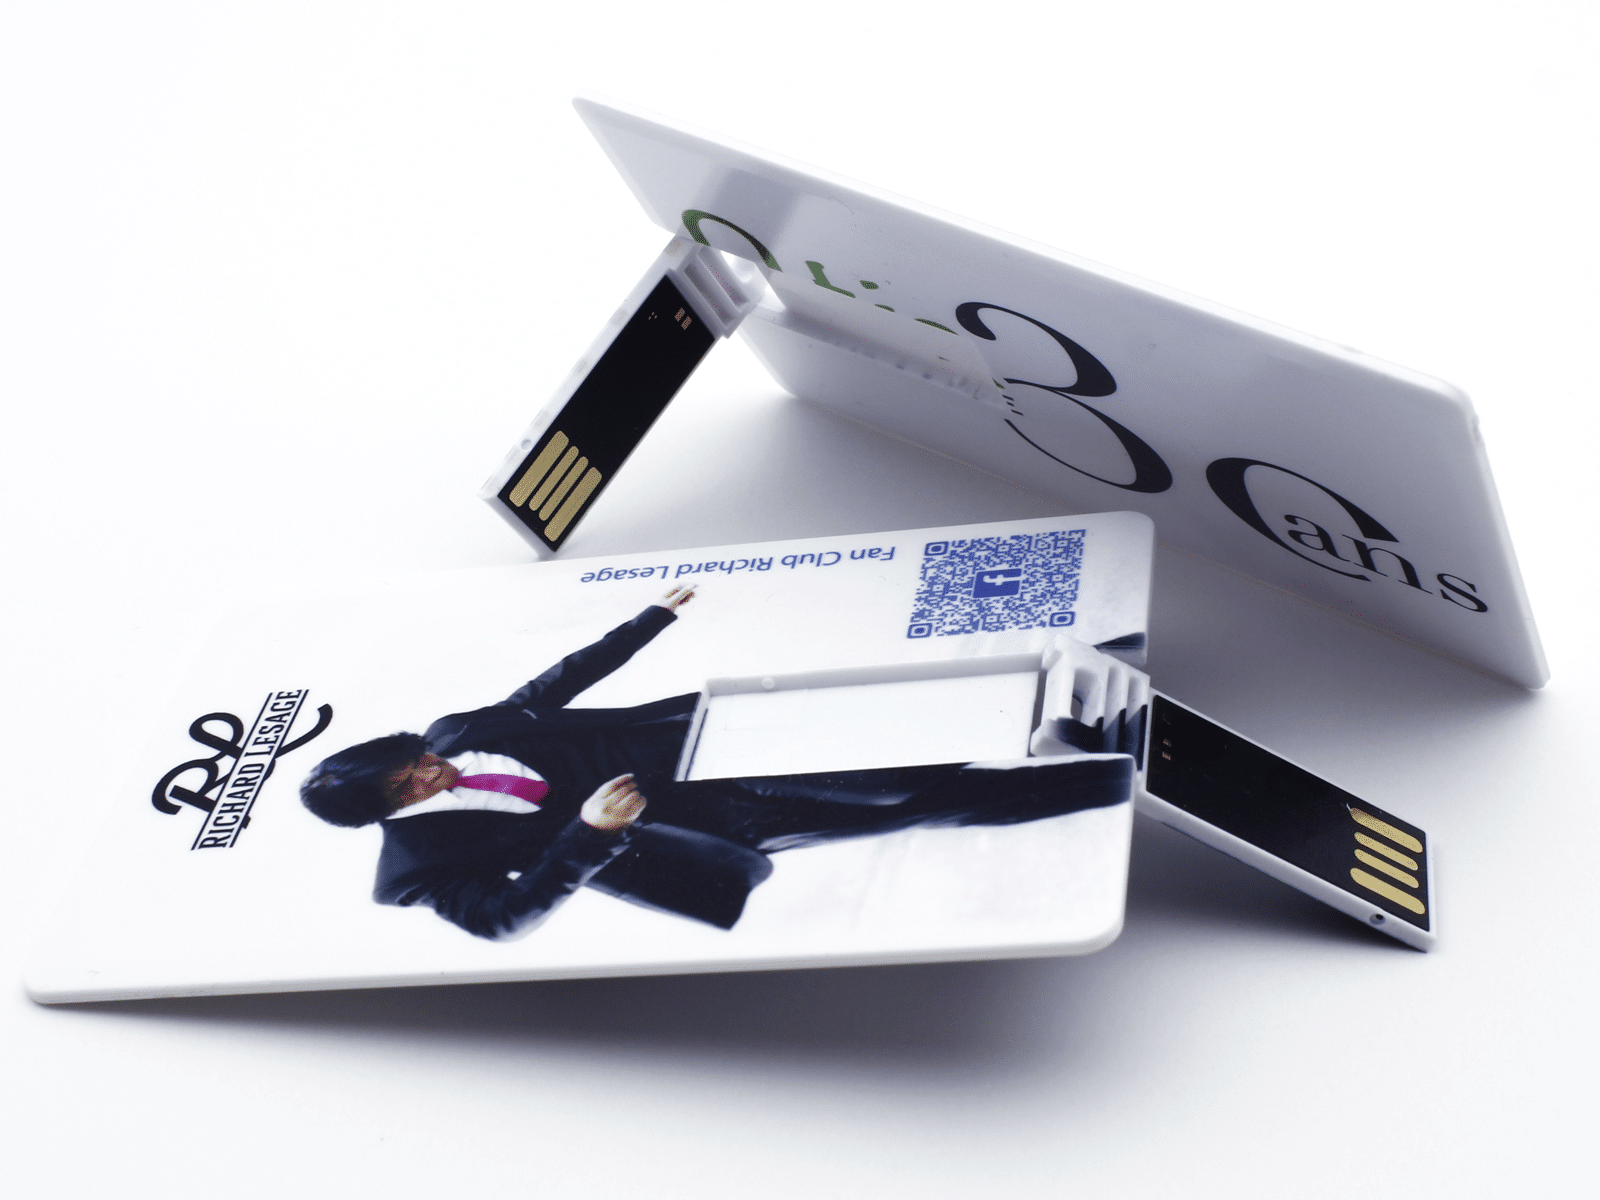 Clé USB 32 go format carte de visite